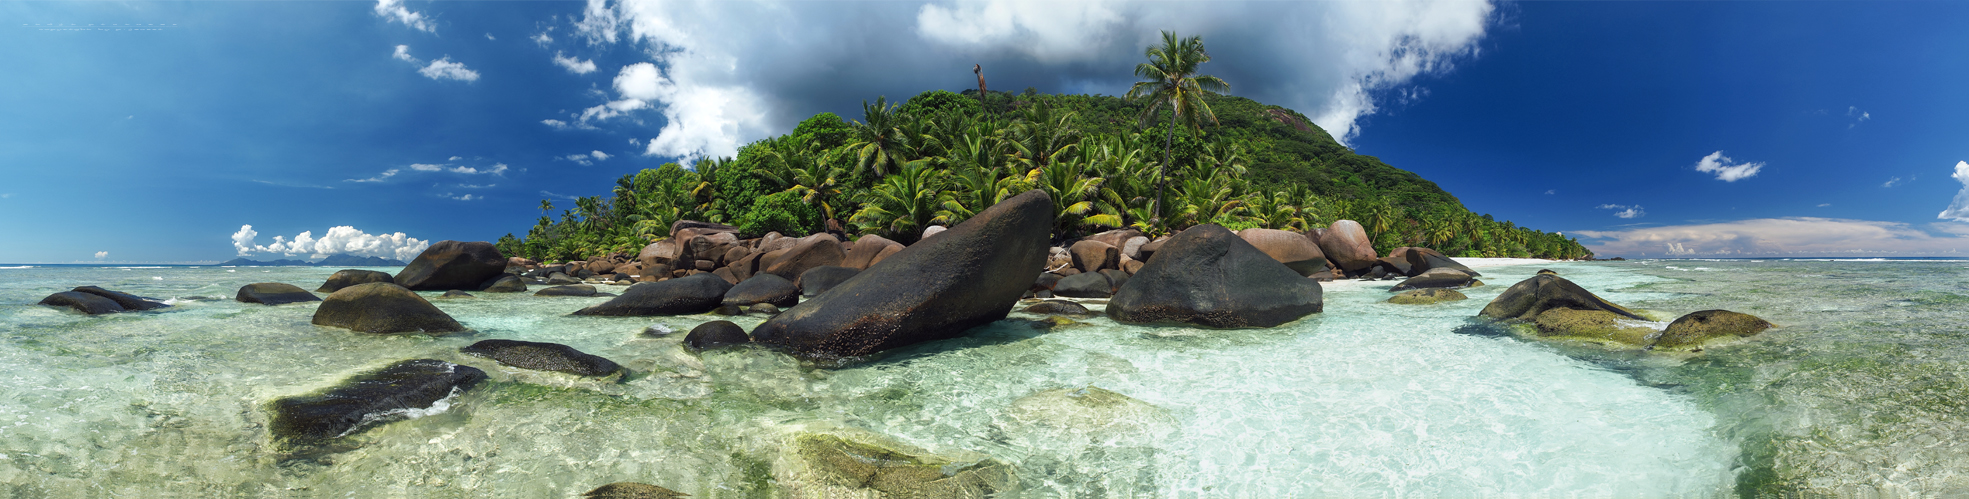 Silhouette Island - Seychelles 2015